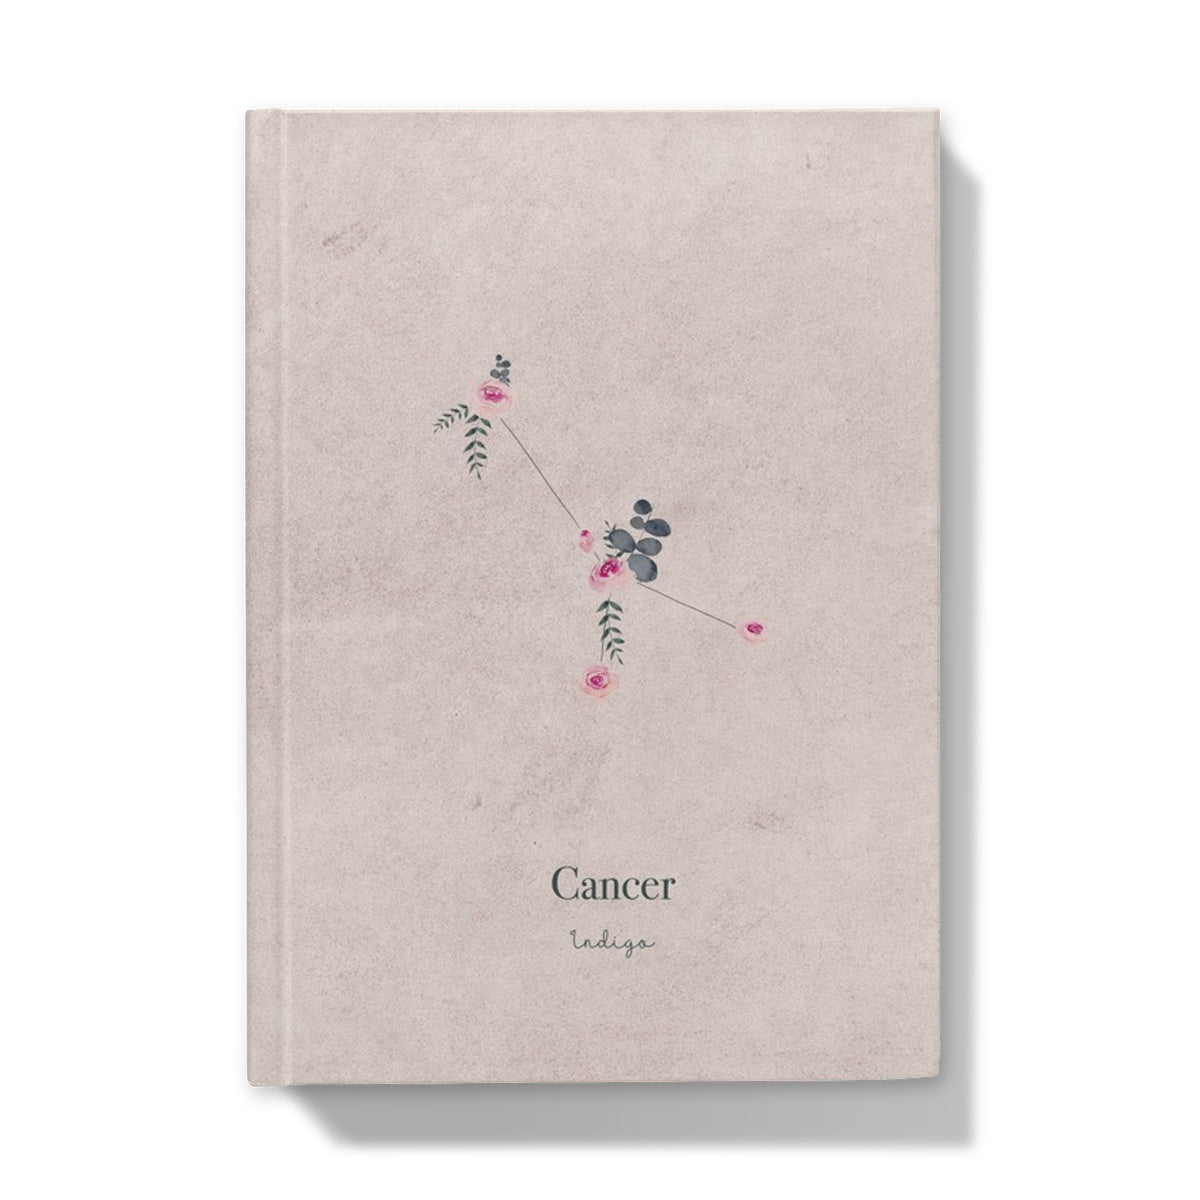 "Cancer" - Carnet